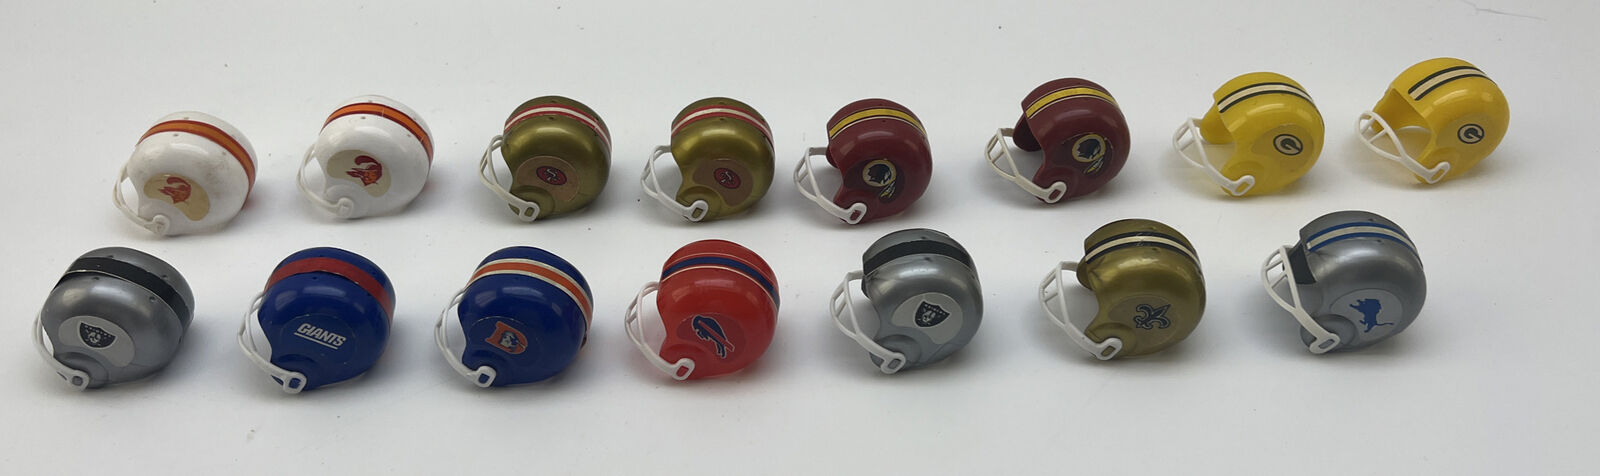 NFL Football Helmet Mini Miniature   Lot Of 15 Vending Toy Made By O.P.I.